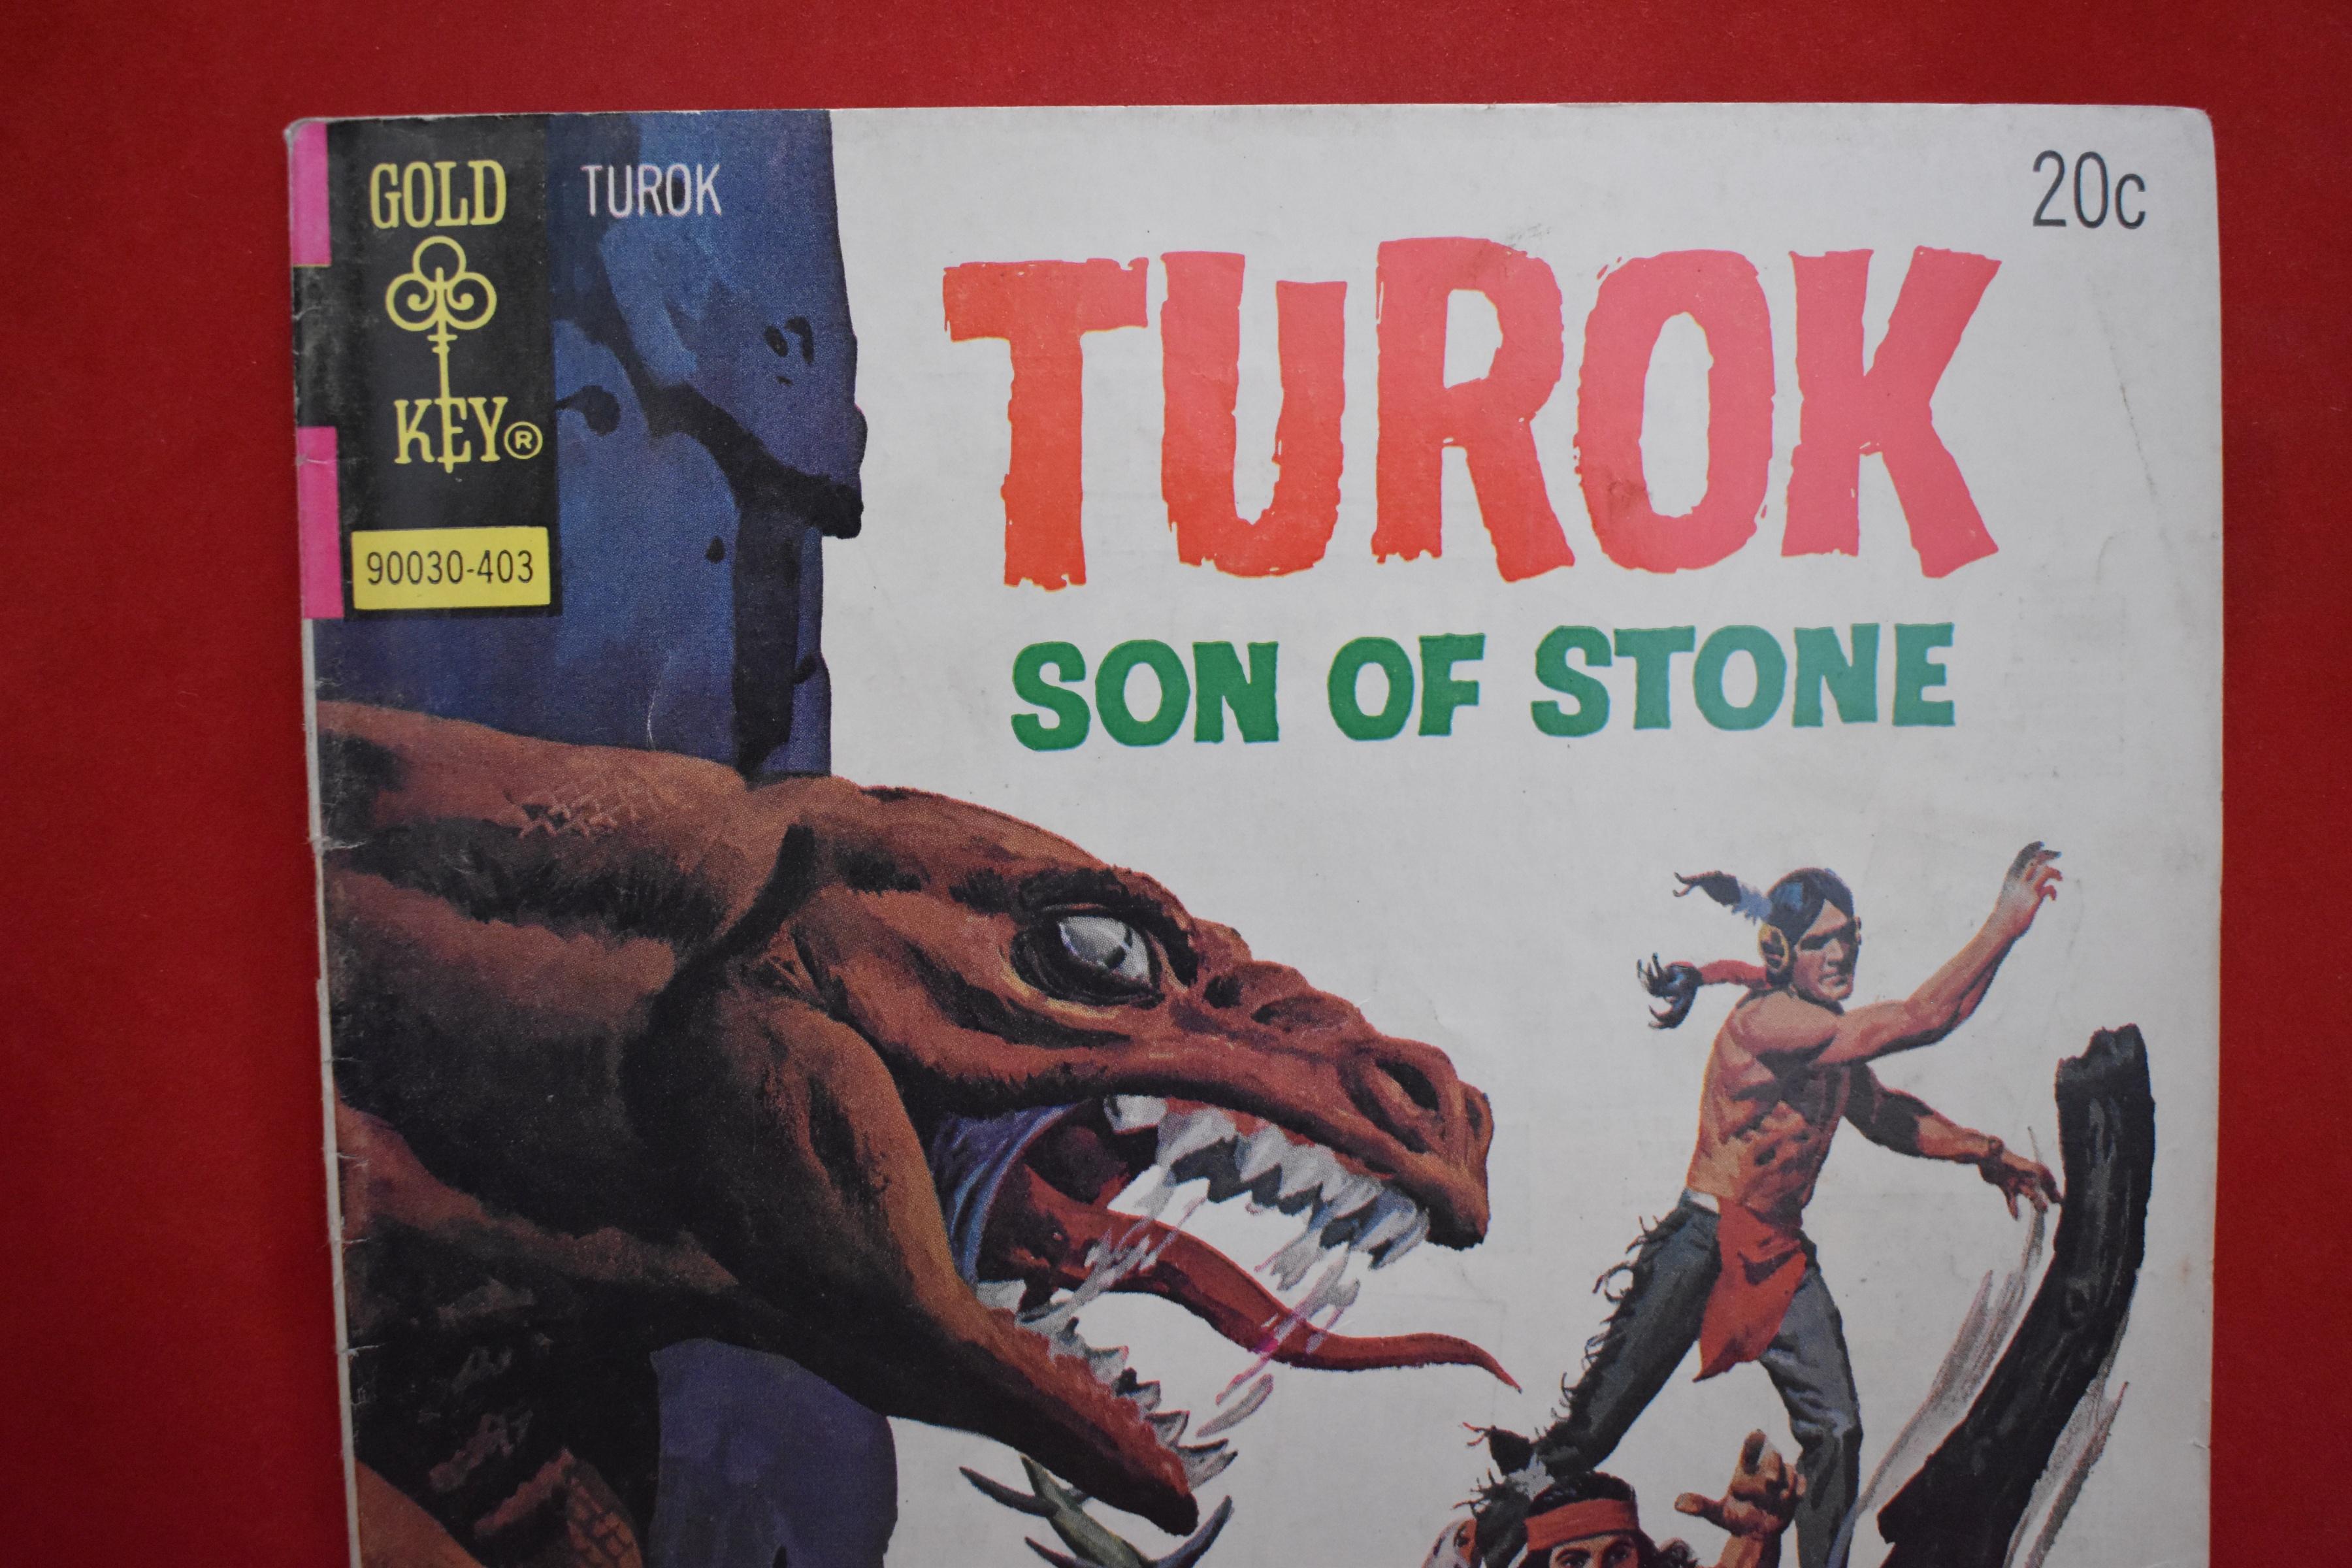 TUROK: SON OF STONE #89 | THE SLAVE MASTER | GOLD KEY - 1974